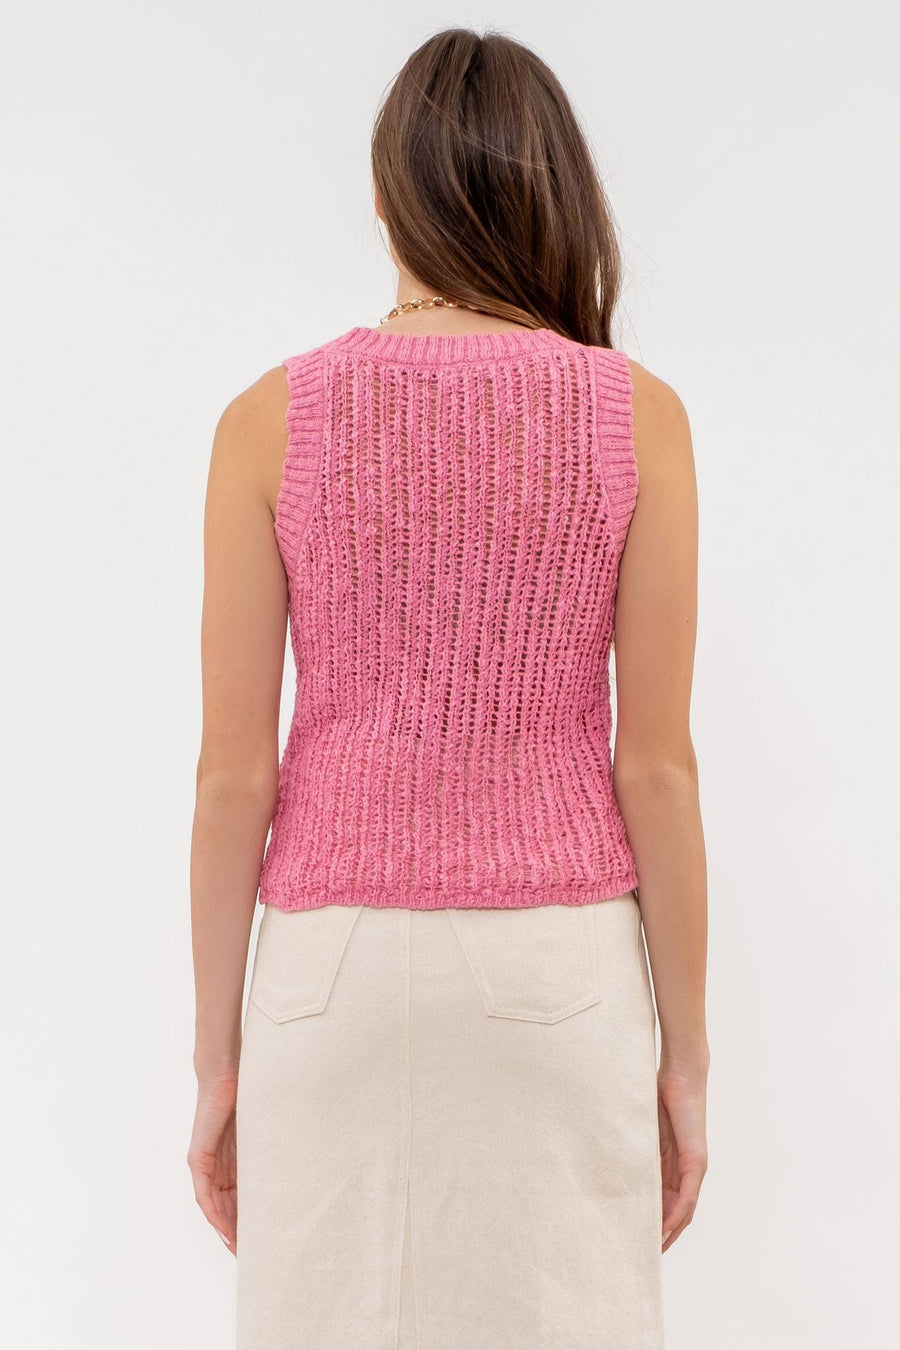 “Deidra” Round Neck Crochet Knit Sweater